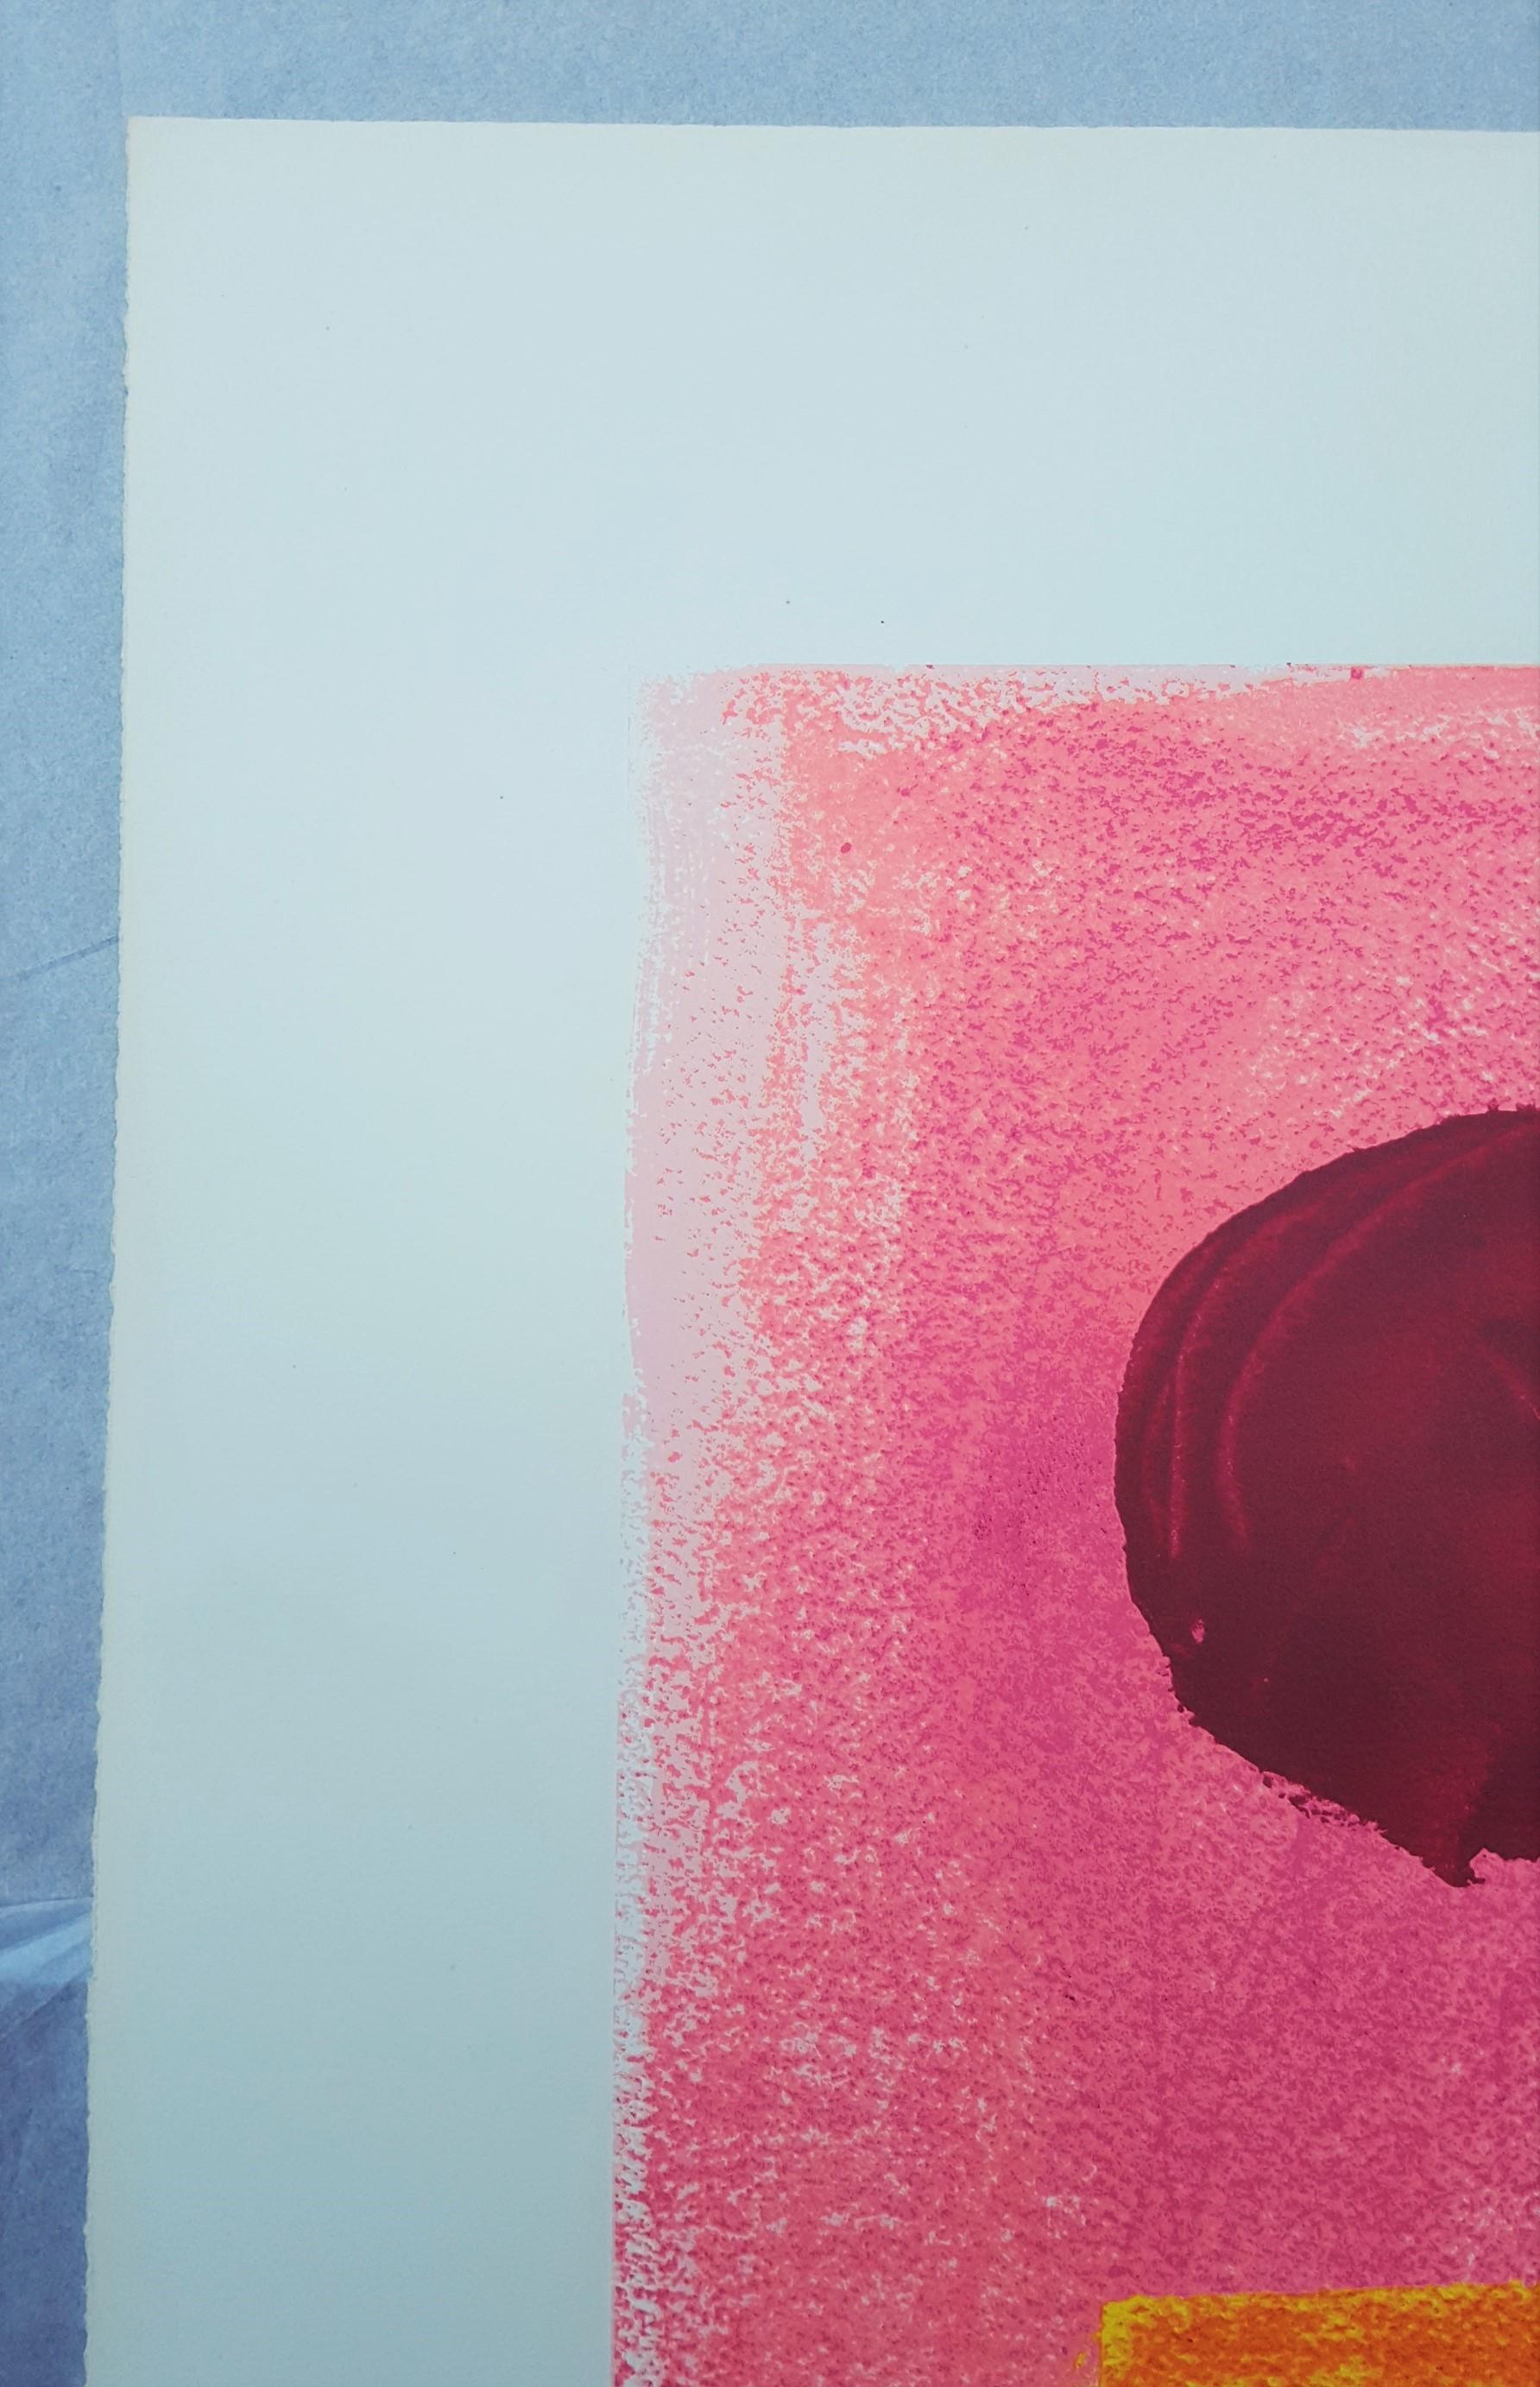 Pink Ground - Beige Abstract Print by Adolph Gottlieb